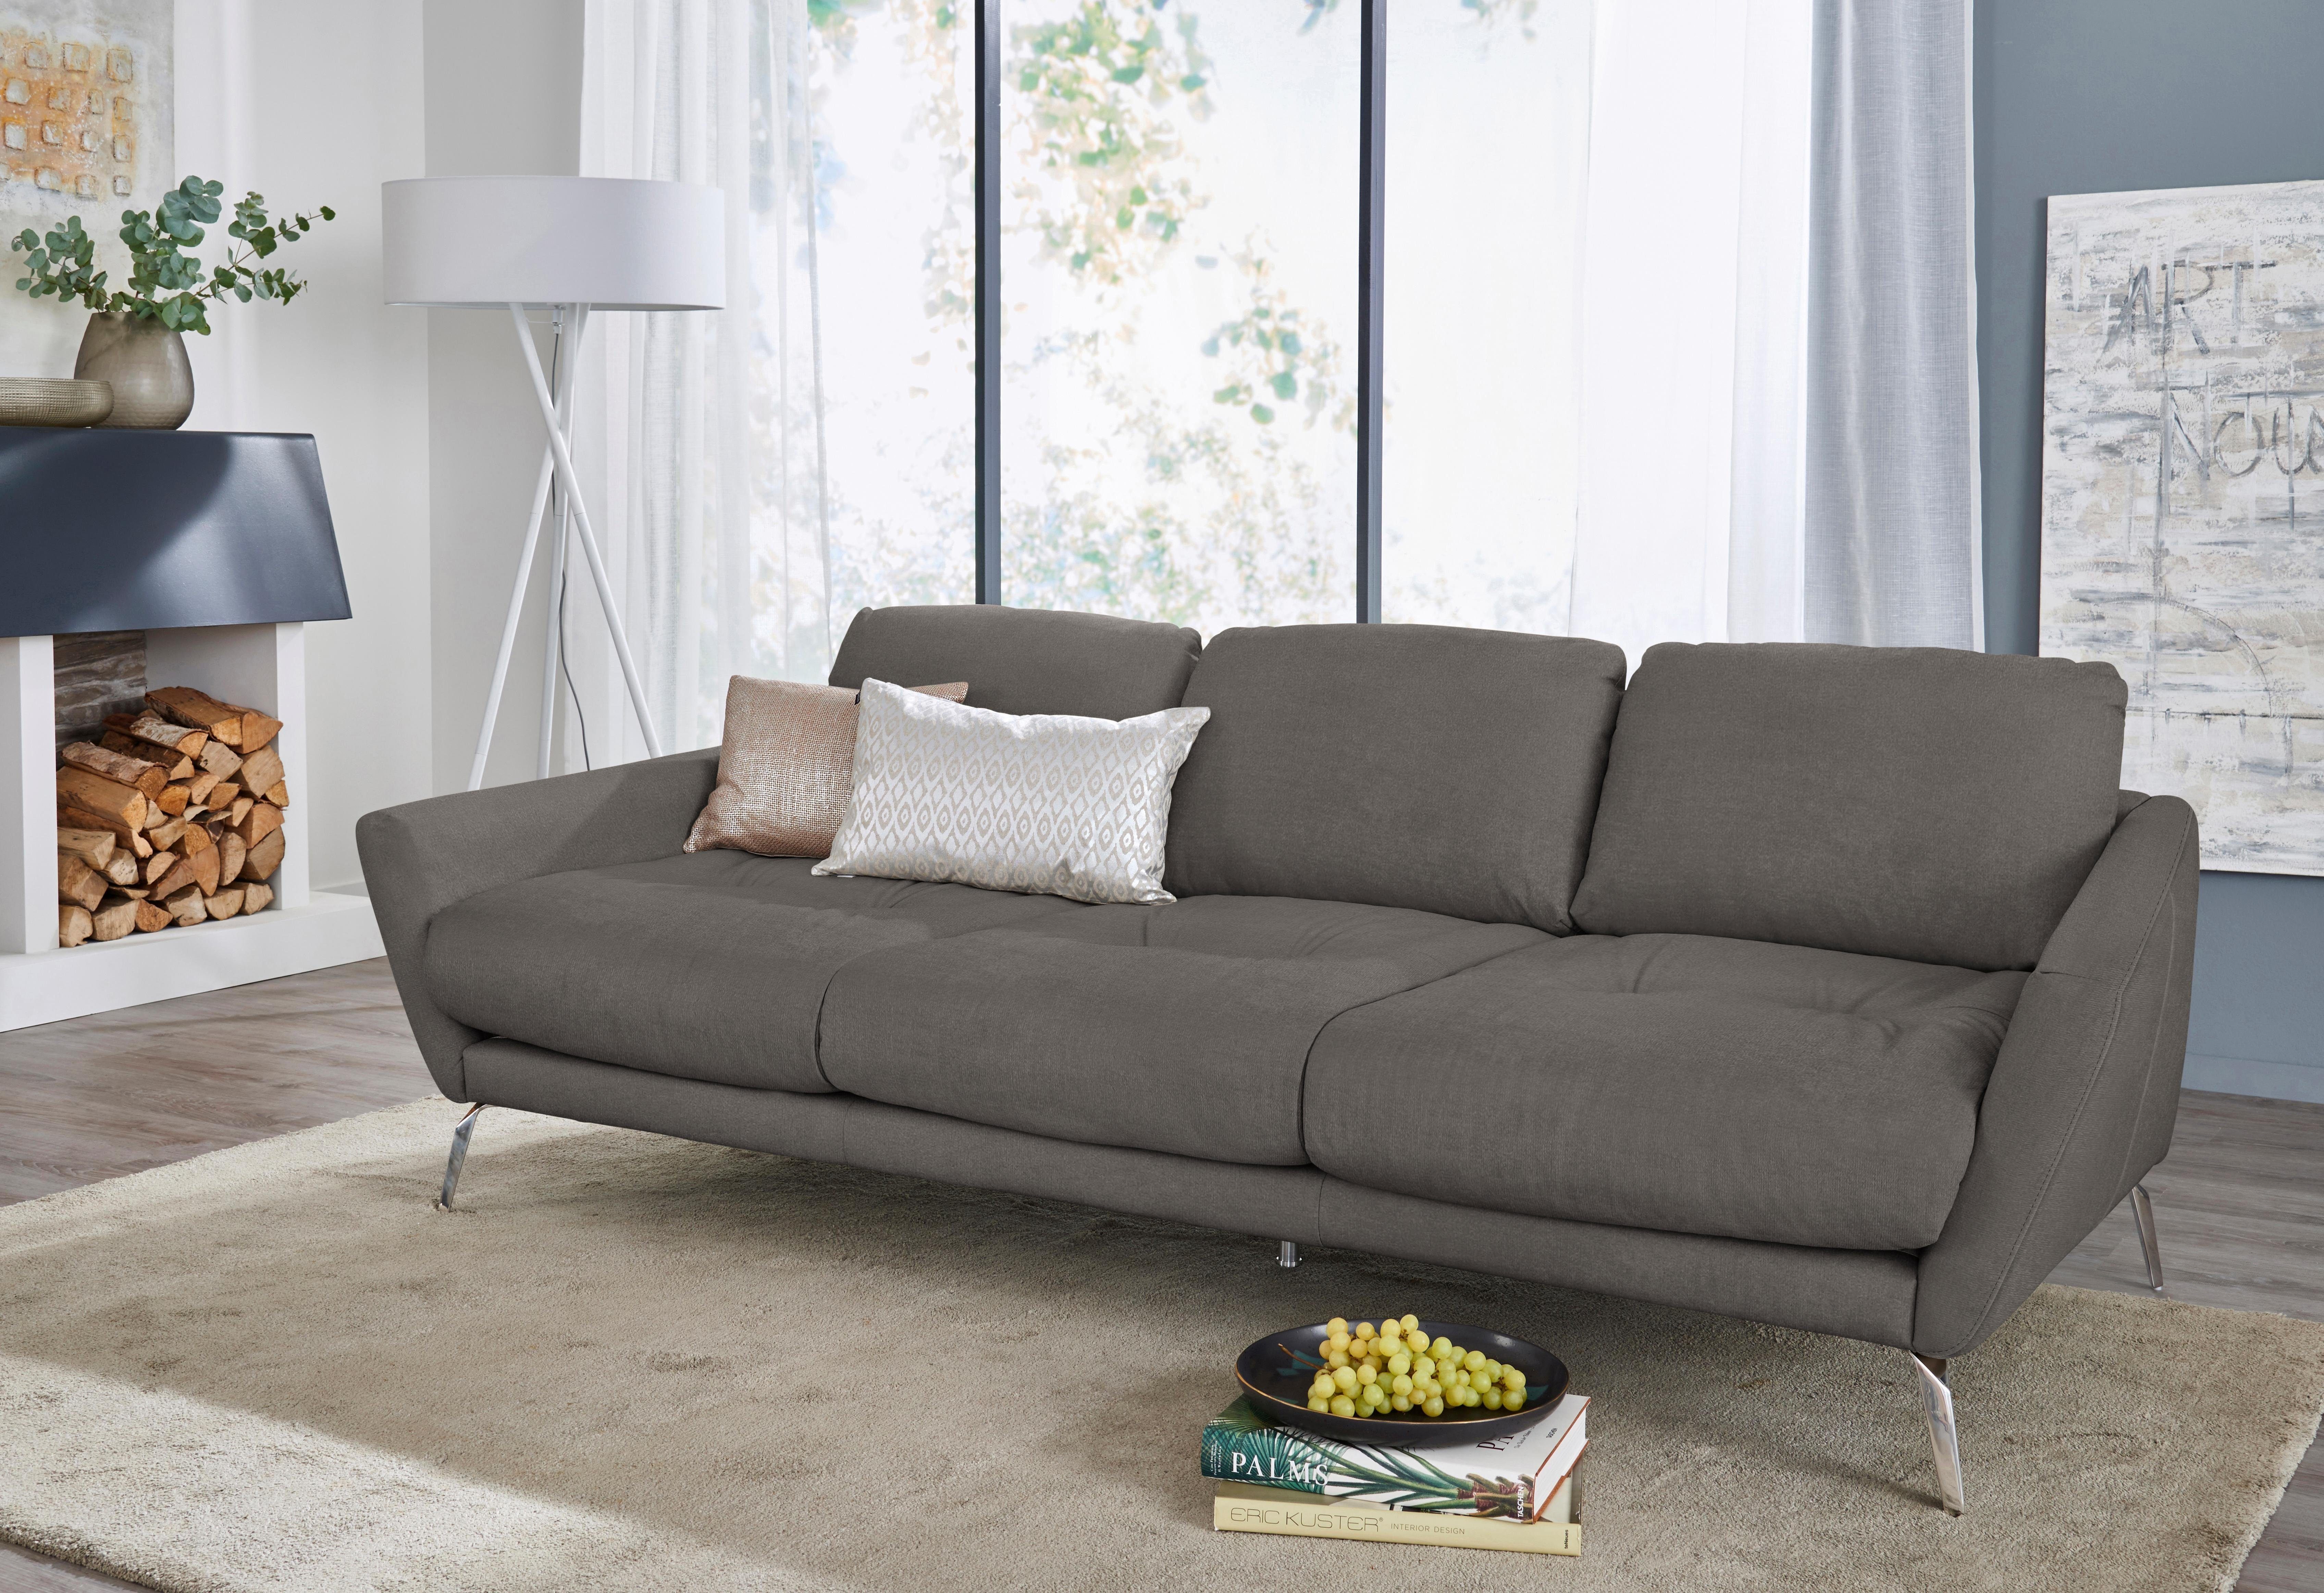 softy, dekorativer Chrom Füße Heftung Big-Sofa W.SCHILLIG Sitz, im glänzend mit